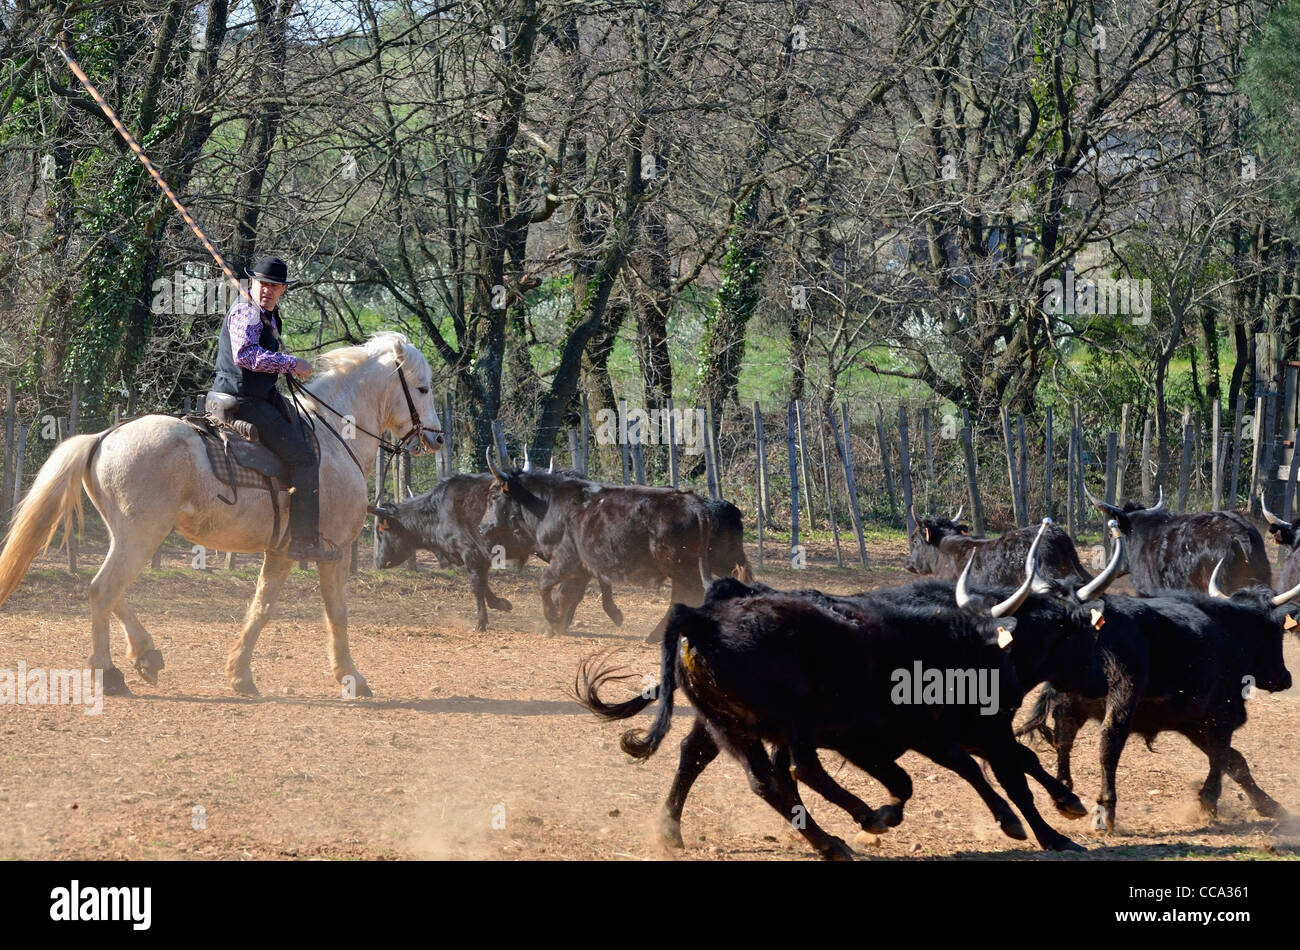 Gardian (Camargue cowboys) on horse assembling bulls in paddock, Camargue, France Stock Photo